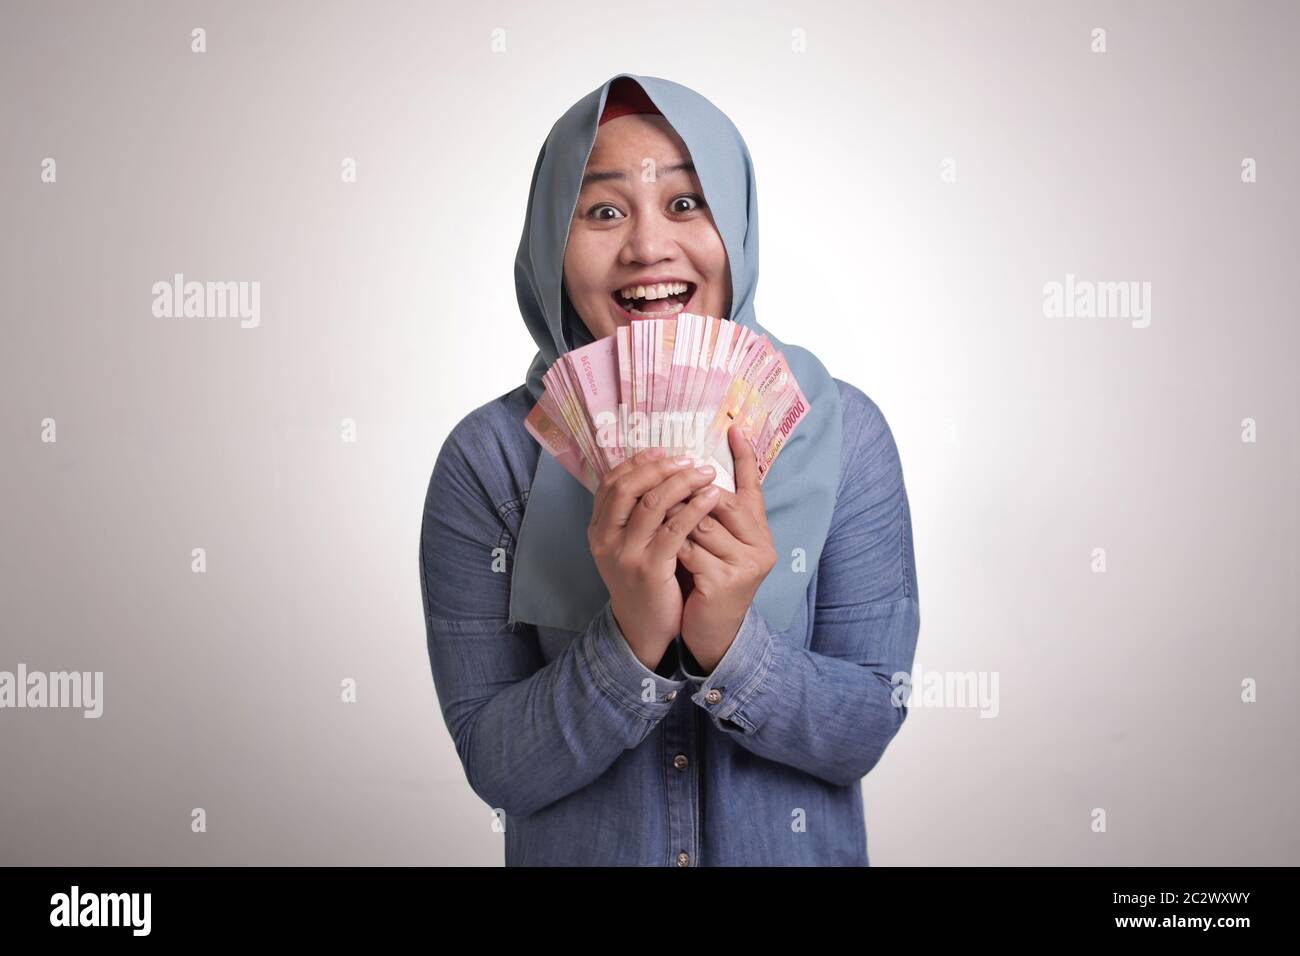 Portrait of Indonesian muslim woman holding rupiah money, smiling laughing winning gesture Stock Photo